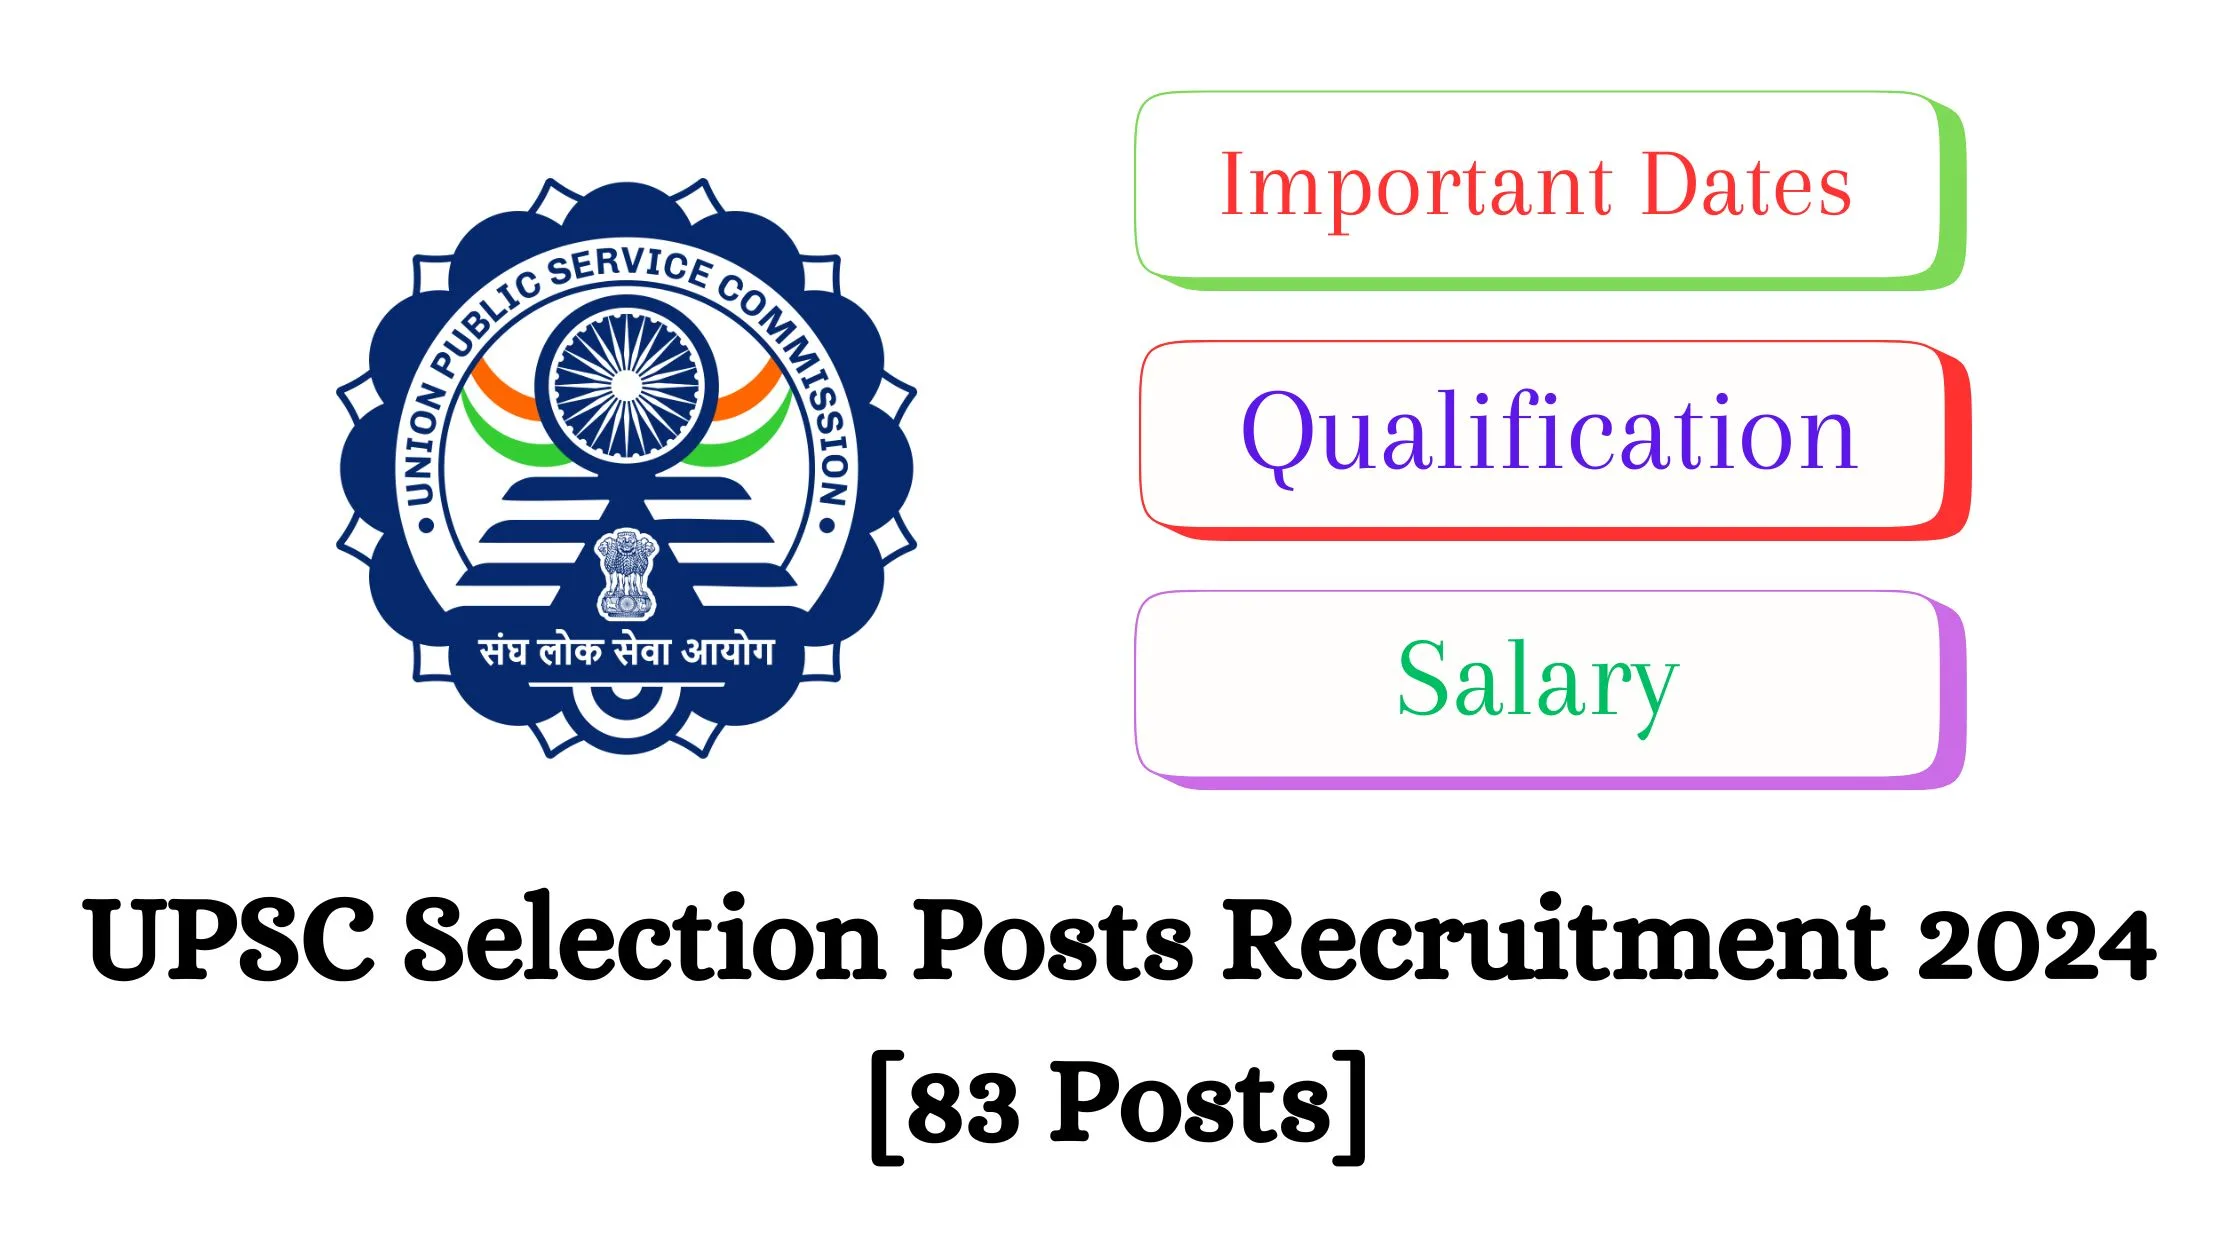 UPSC Selection Posts Recruitment 2024